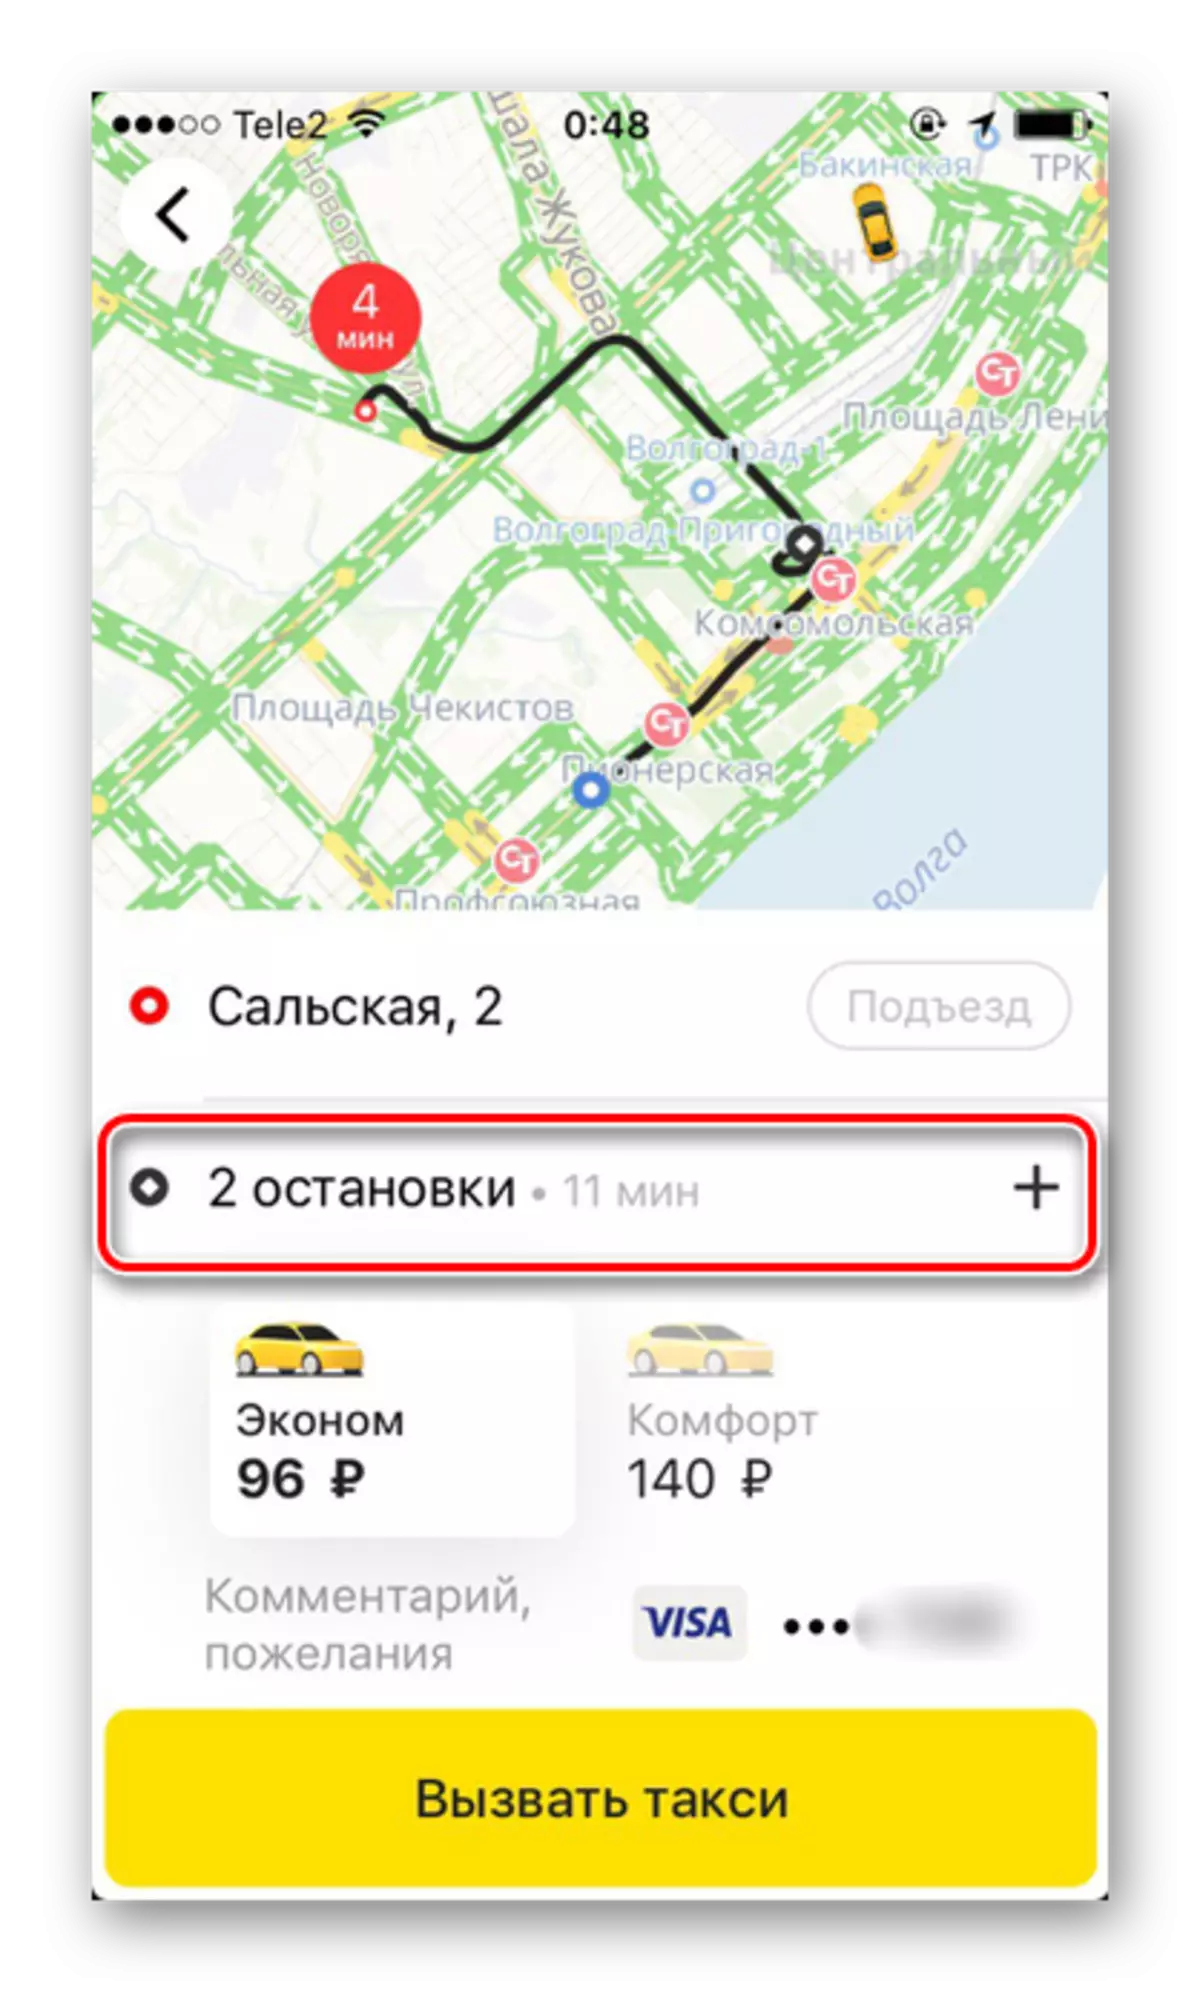 Яндекс.Таксида заказ биргәндә катлаулы маршрут